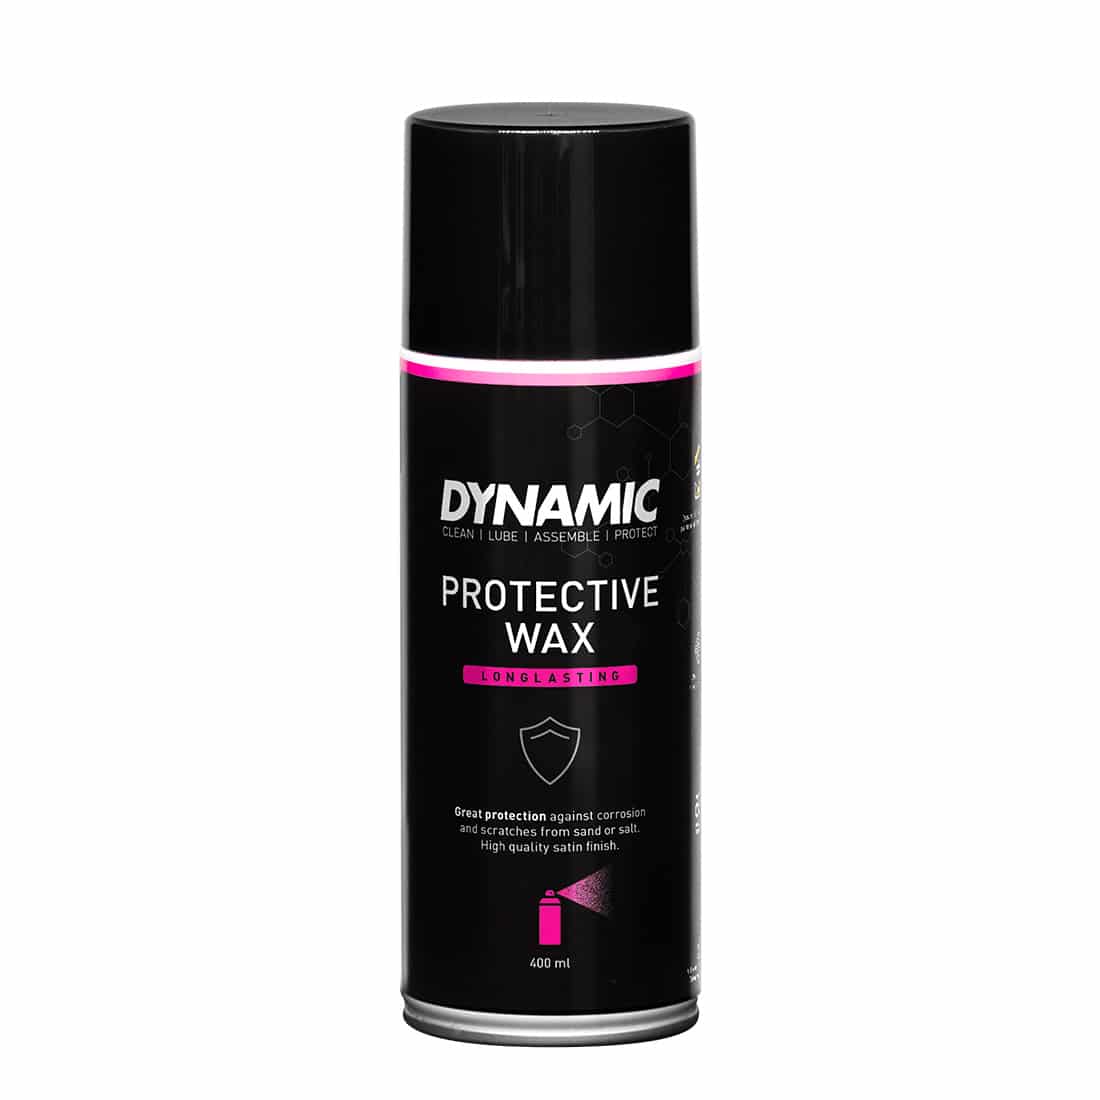 Productfoto van Dynamic Protective Wax - Beschermende Wax - 400ml